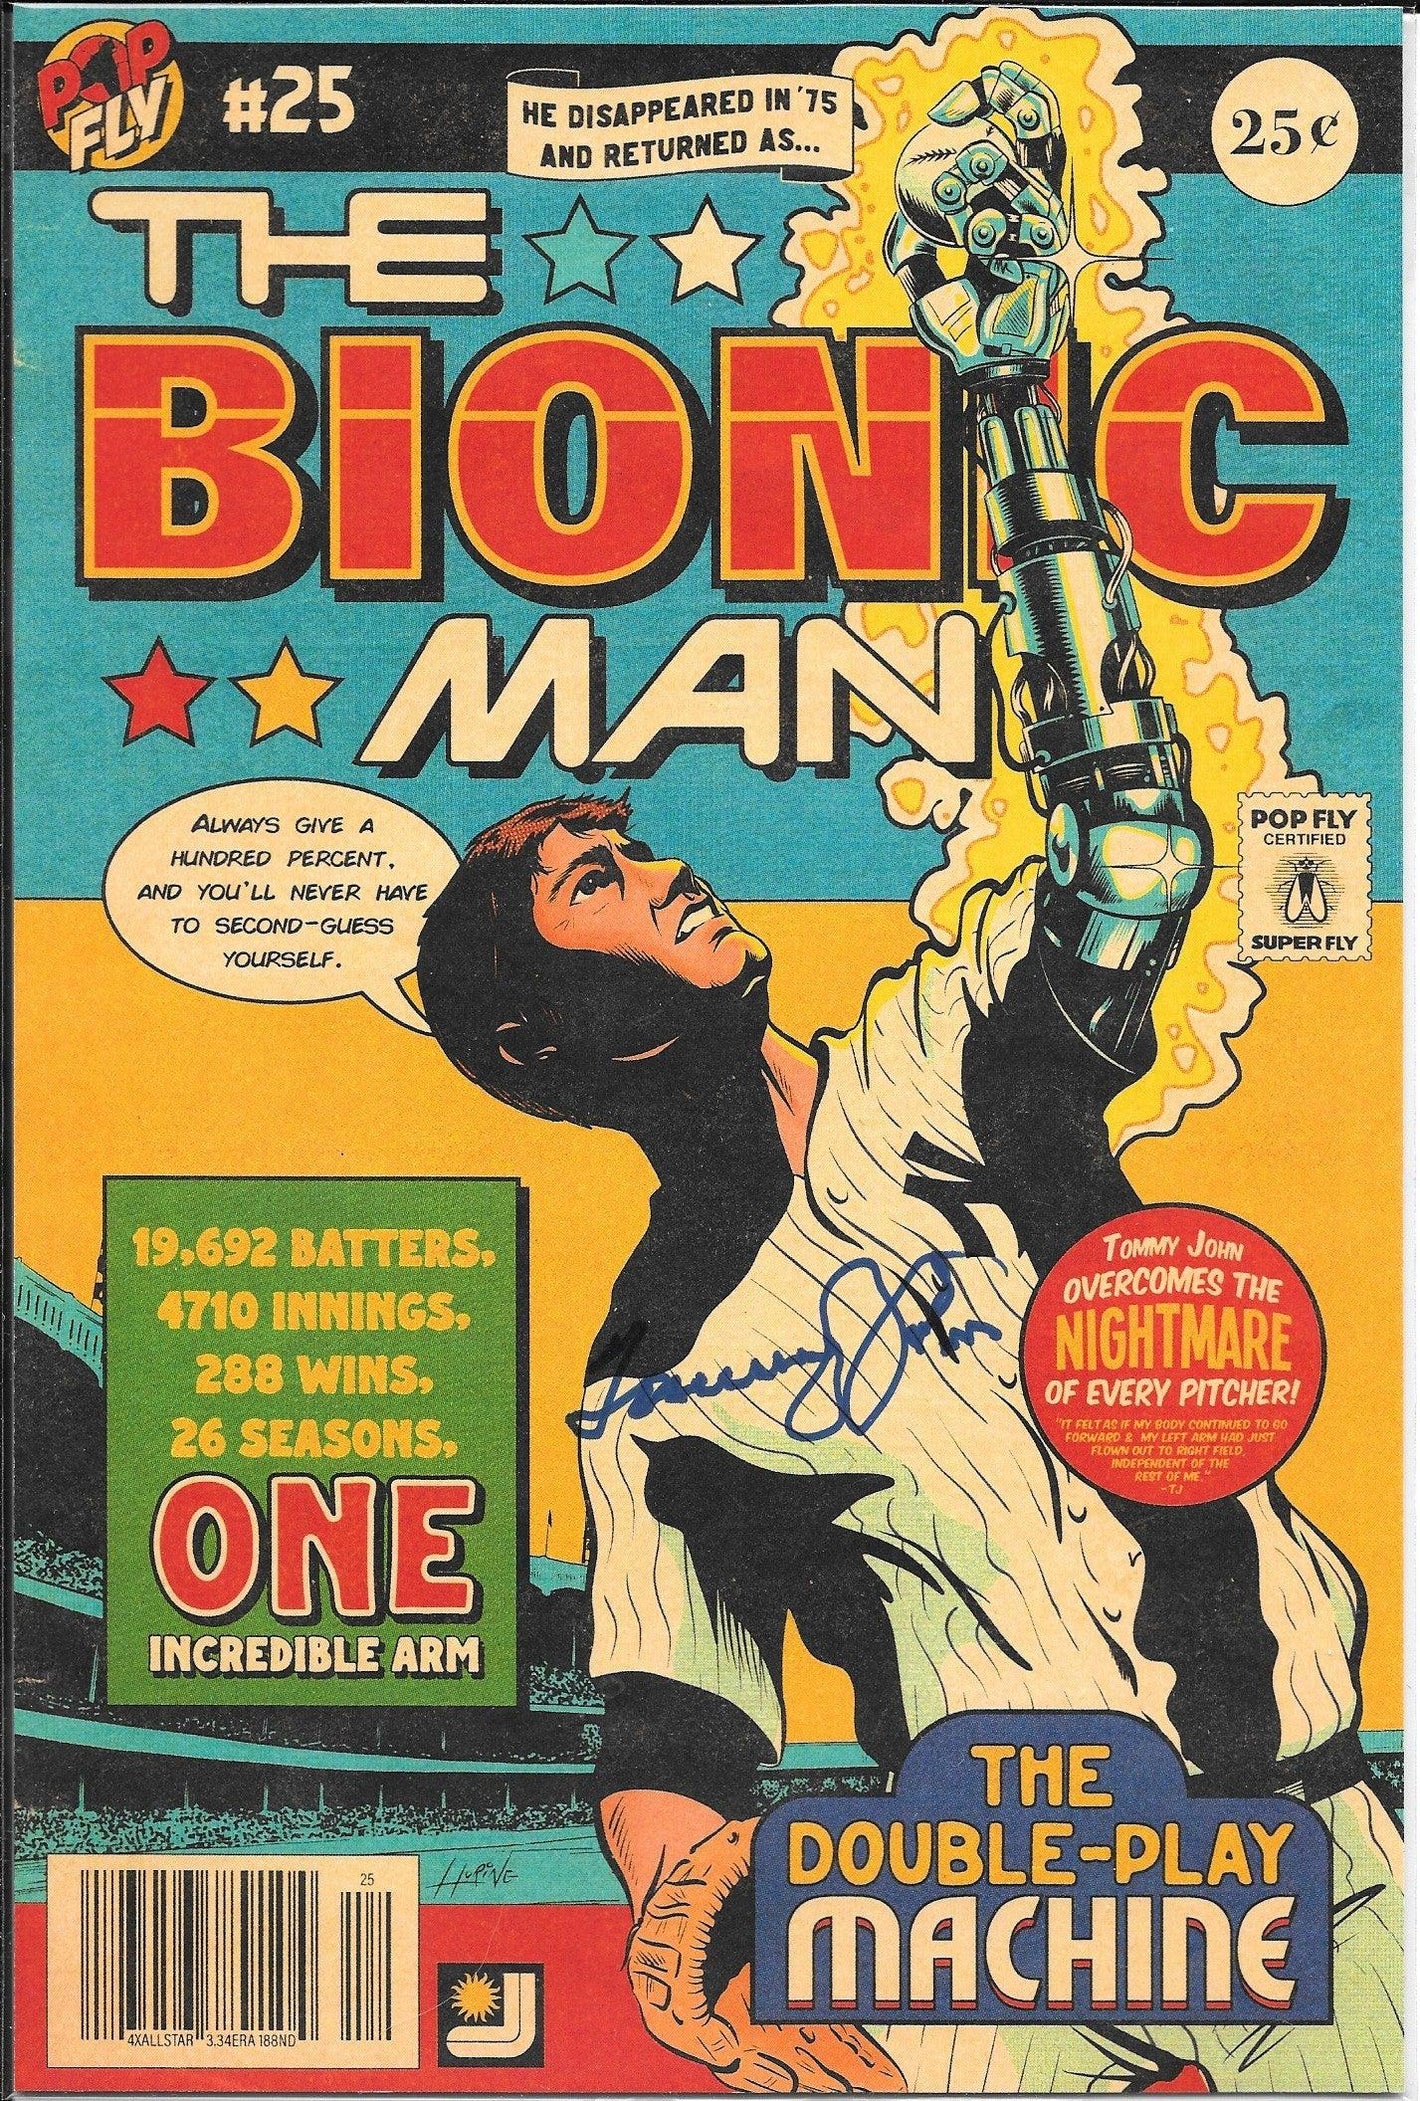 Tommy John "The Bionic Man" Pop Fly Pop Shop Print #73 – Signed by Tommy John & Daniel Jacob Horine - PastPros